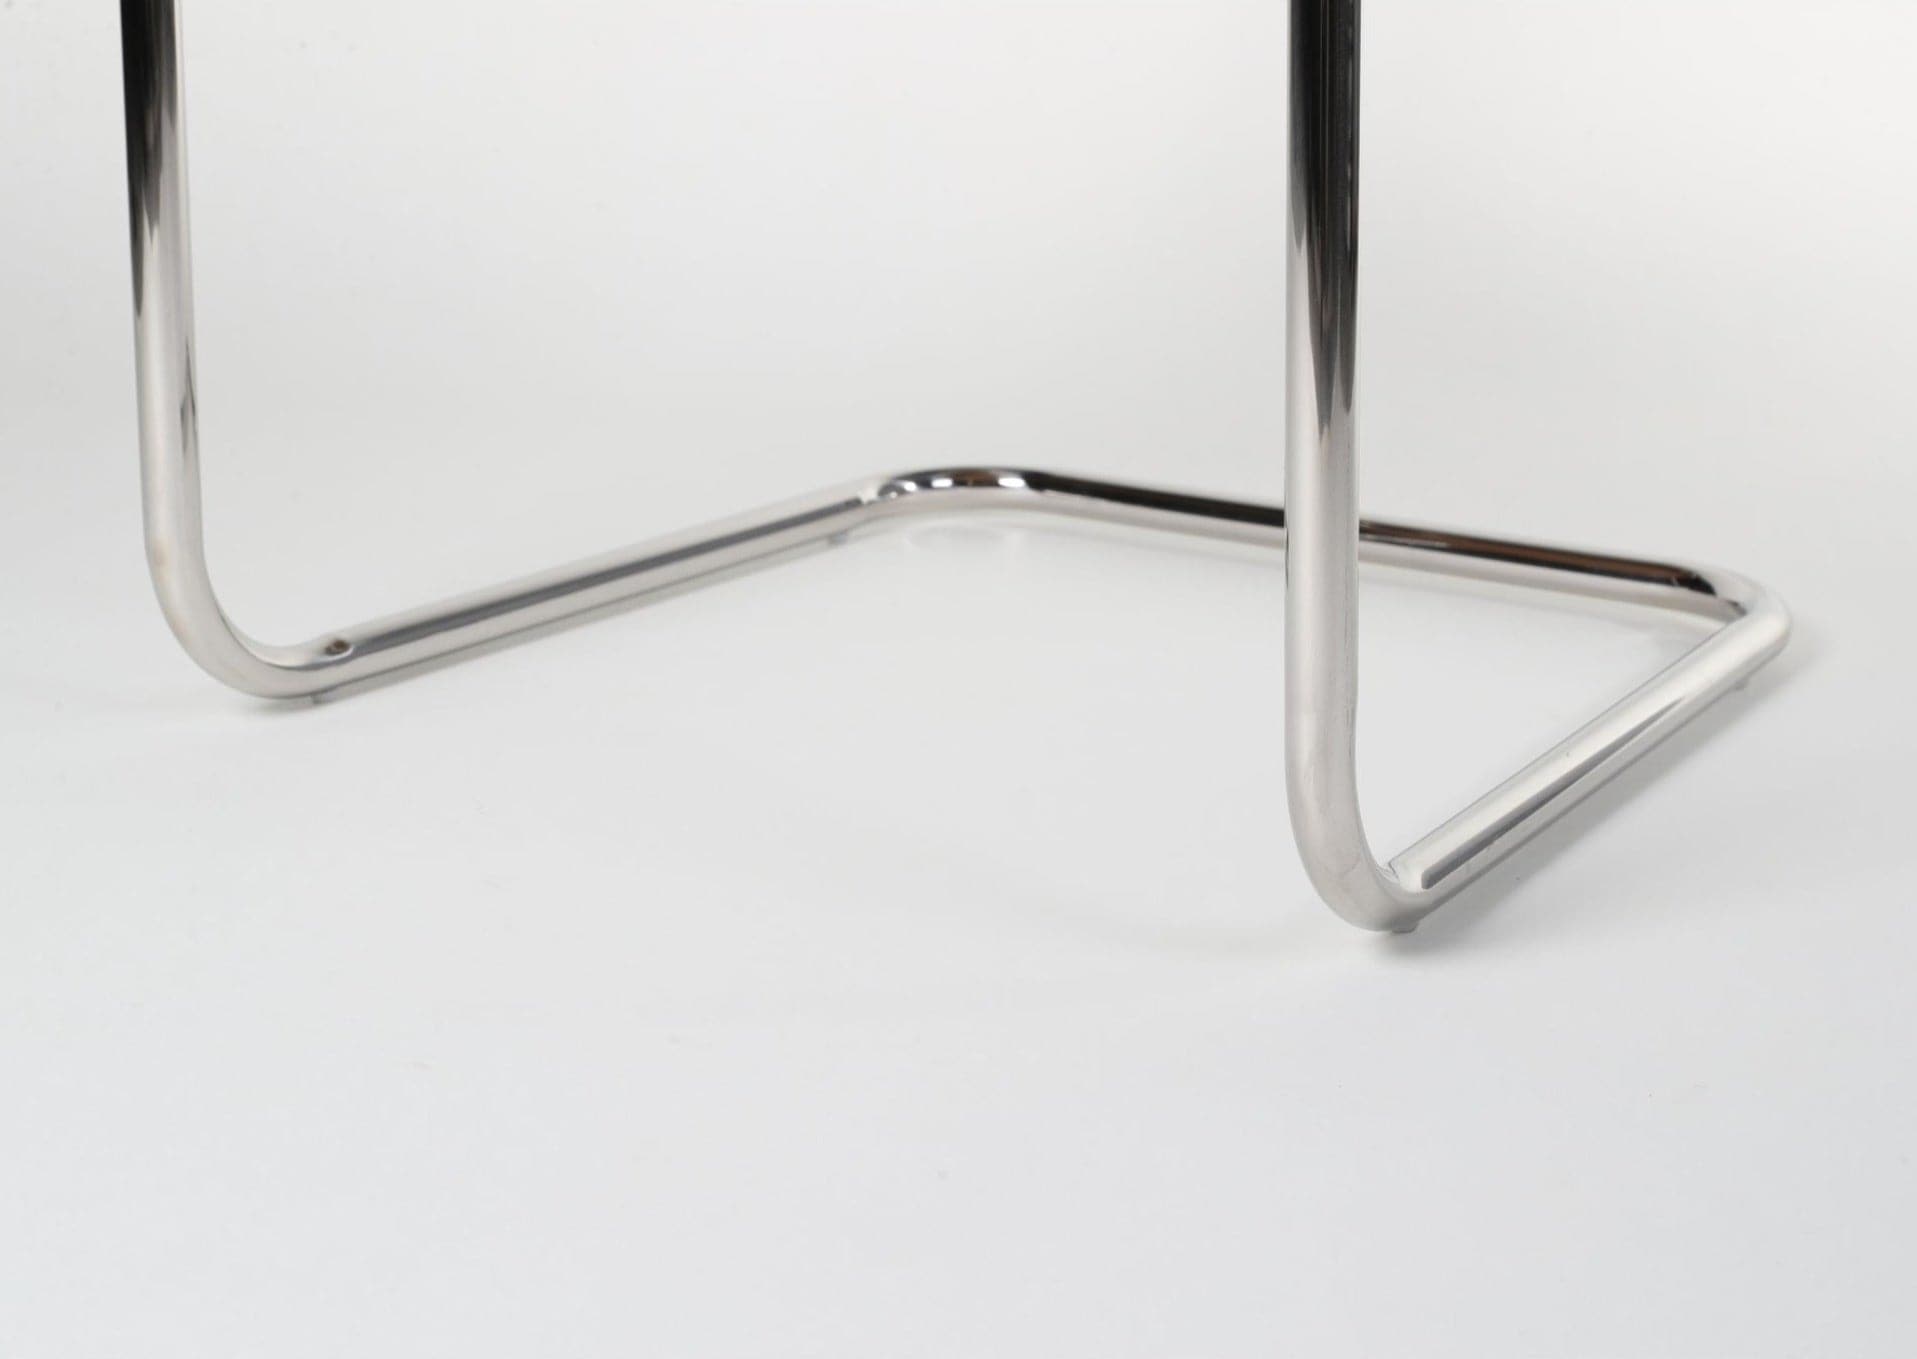 S 34 Chair | Mart Stam Replica